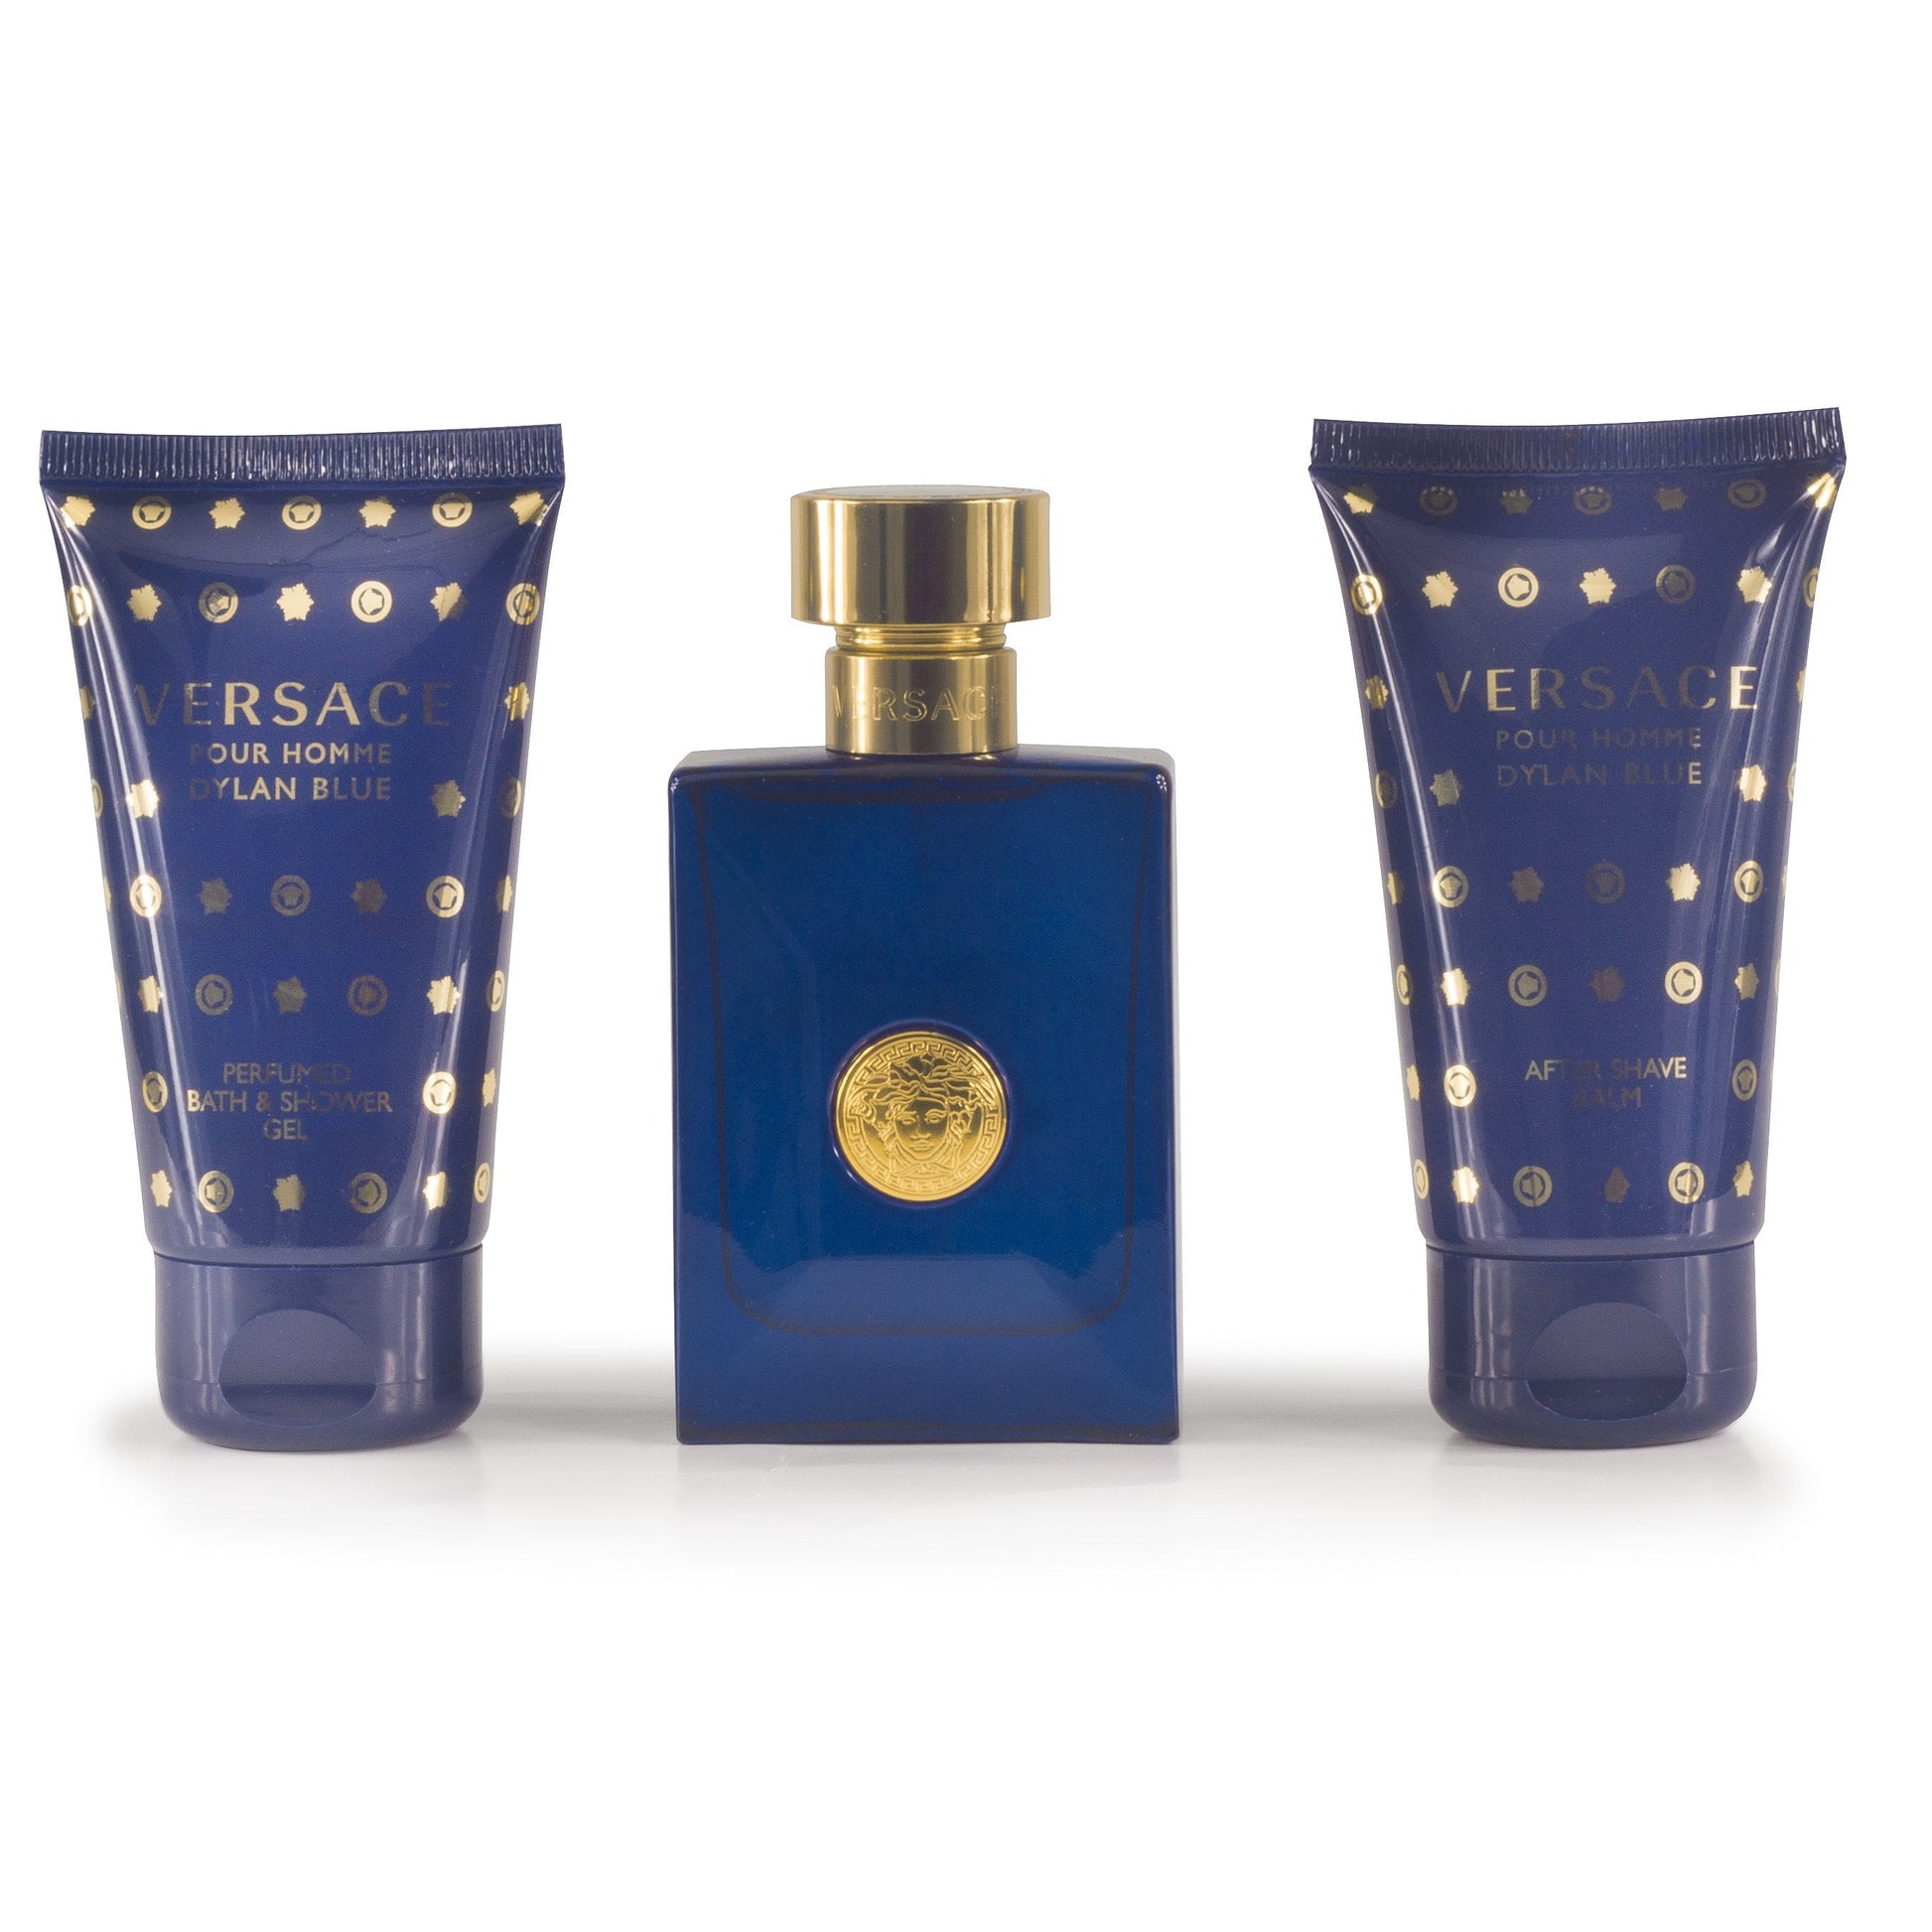 Versace Dylan Blue by Versace EDT Spray 1.0 oz (30 ml) (m) 8011003825721 -  Fragrances & Beauty, Dylan Blue - Jomashop